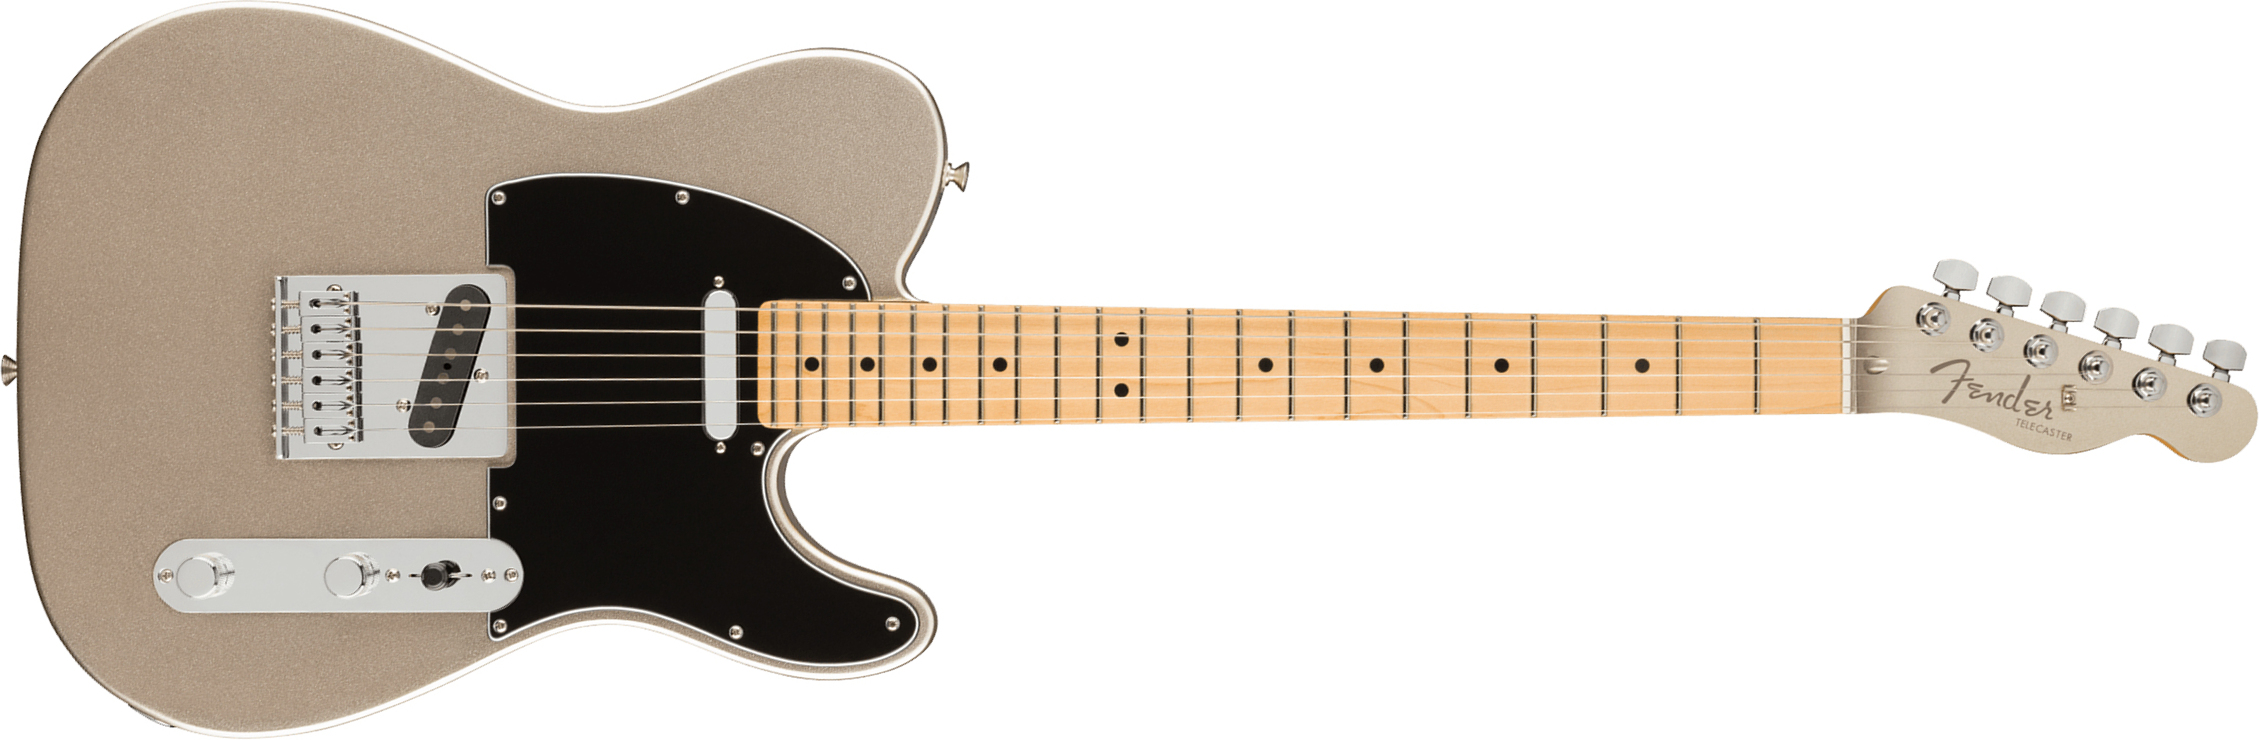 Fender Tele 75th Anniversary Ltd Mex Mn - Diamond Anniversary - Str shape electric guitar - Main picture